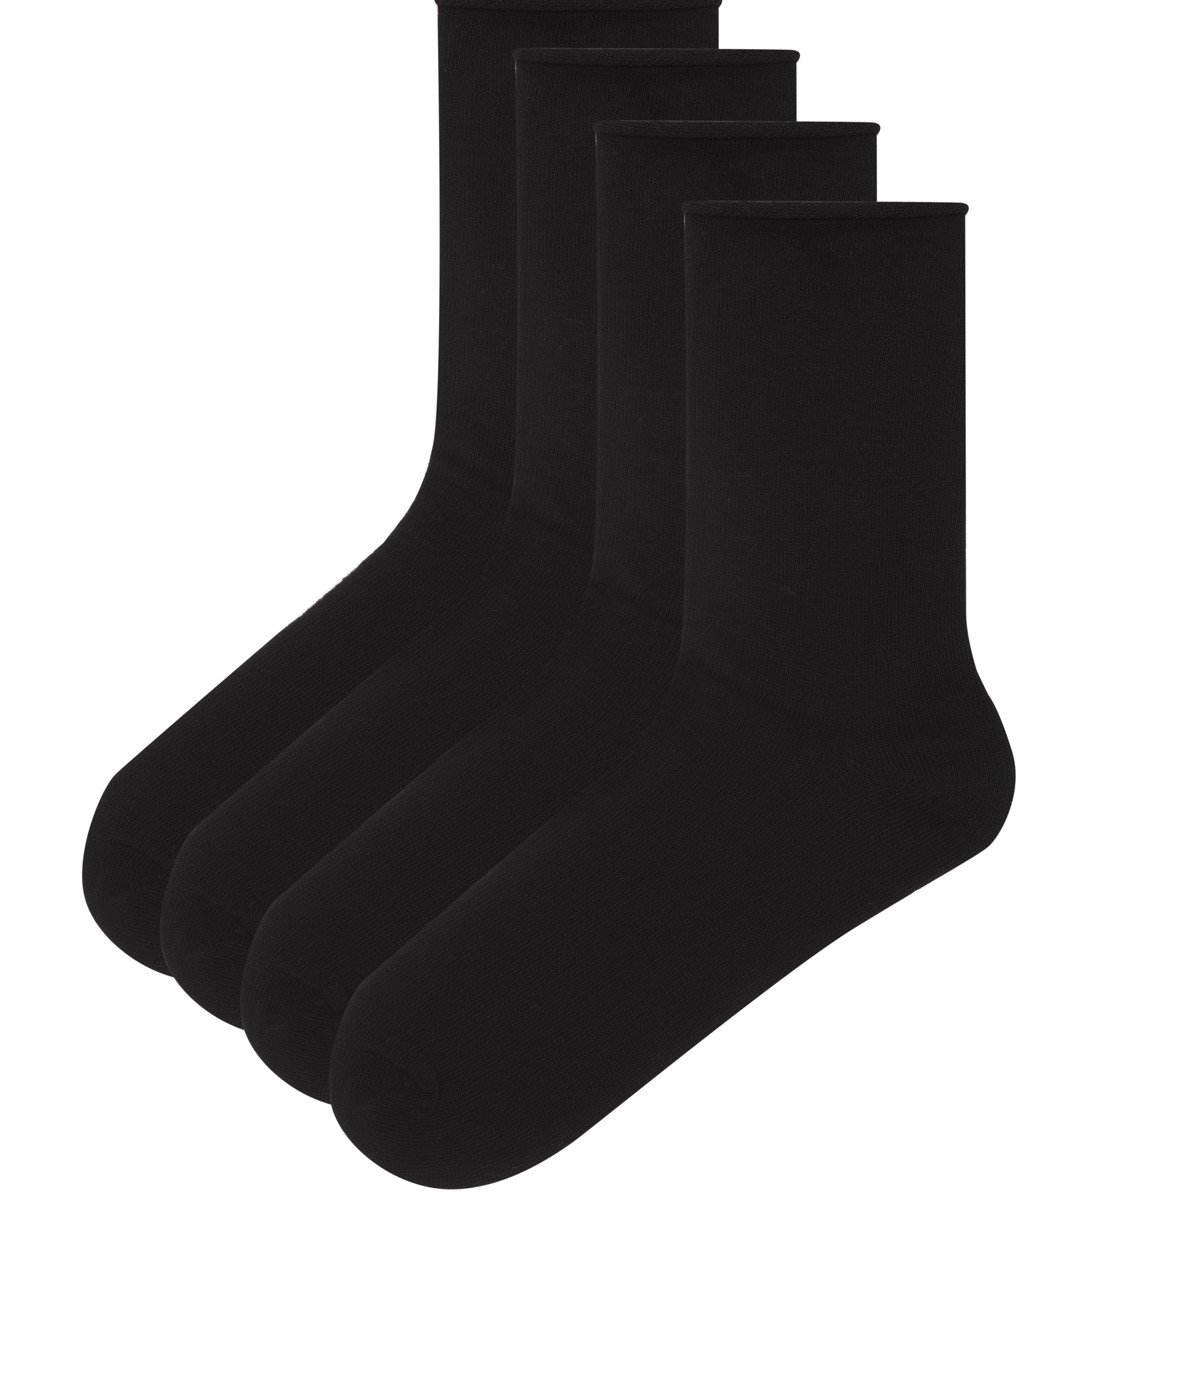 Simple 4in1 Socket Socks